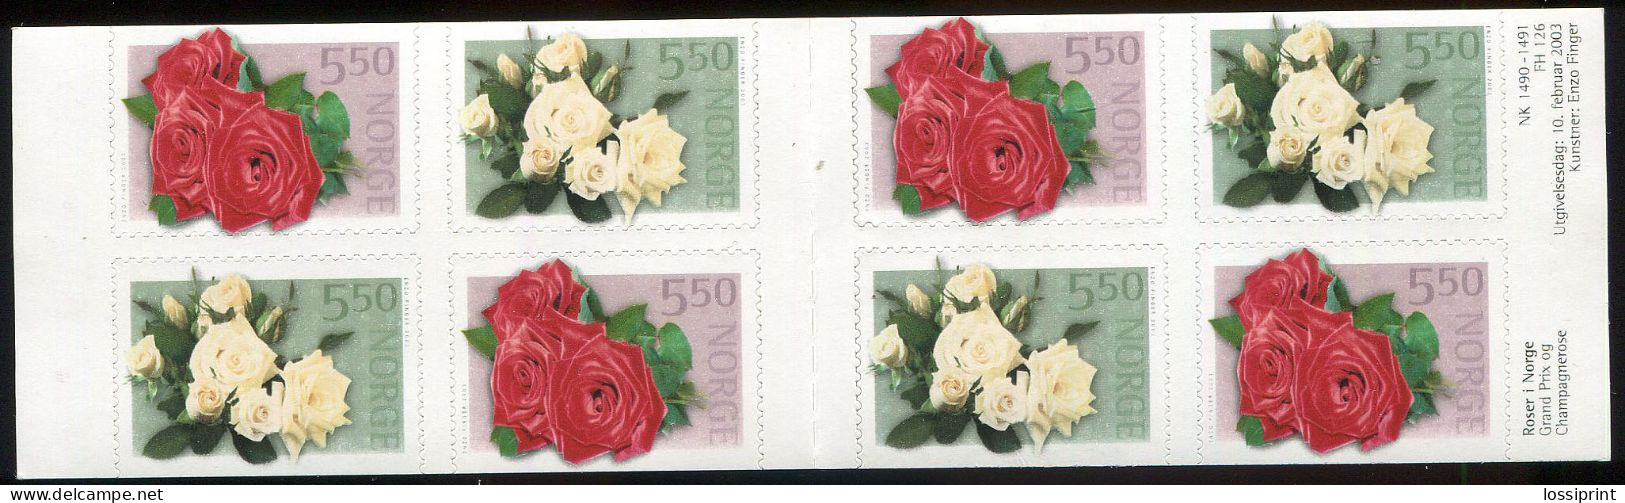 Norway:Unused Stamps Booklet Flowers, 2003, MNH - Rosas